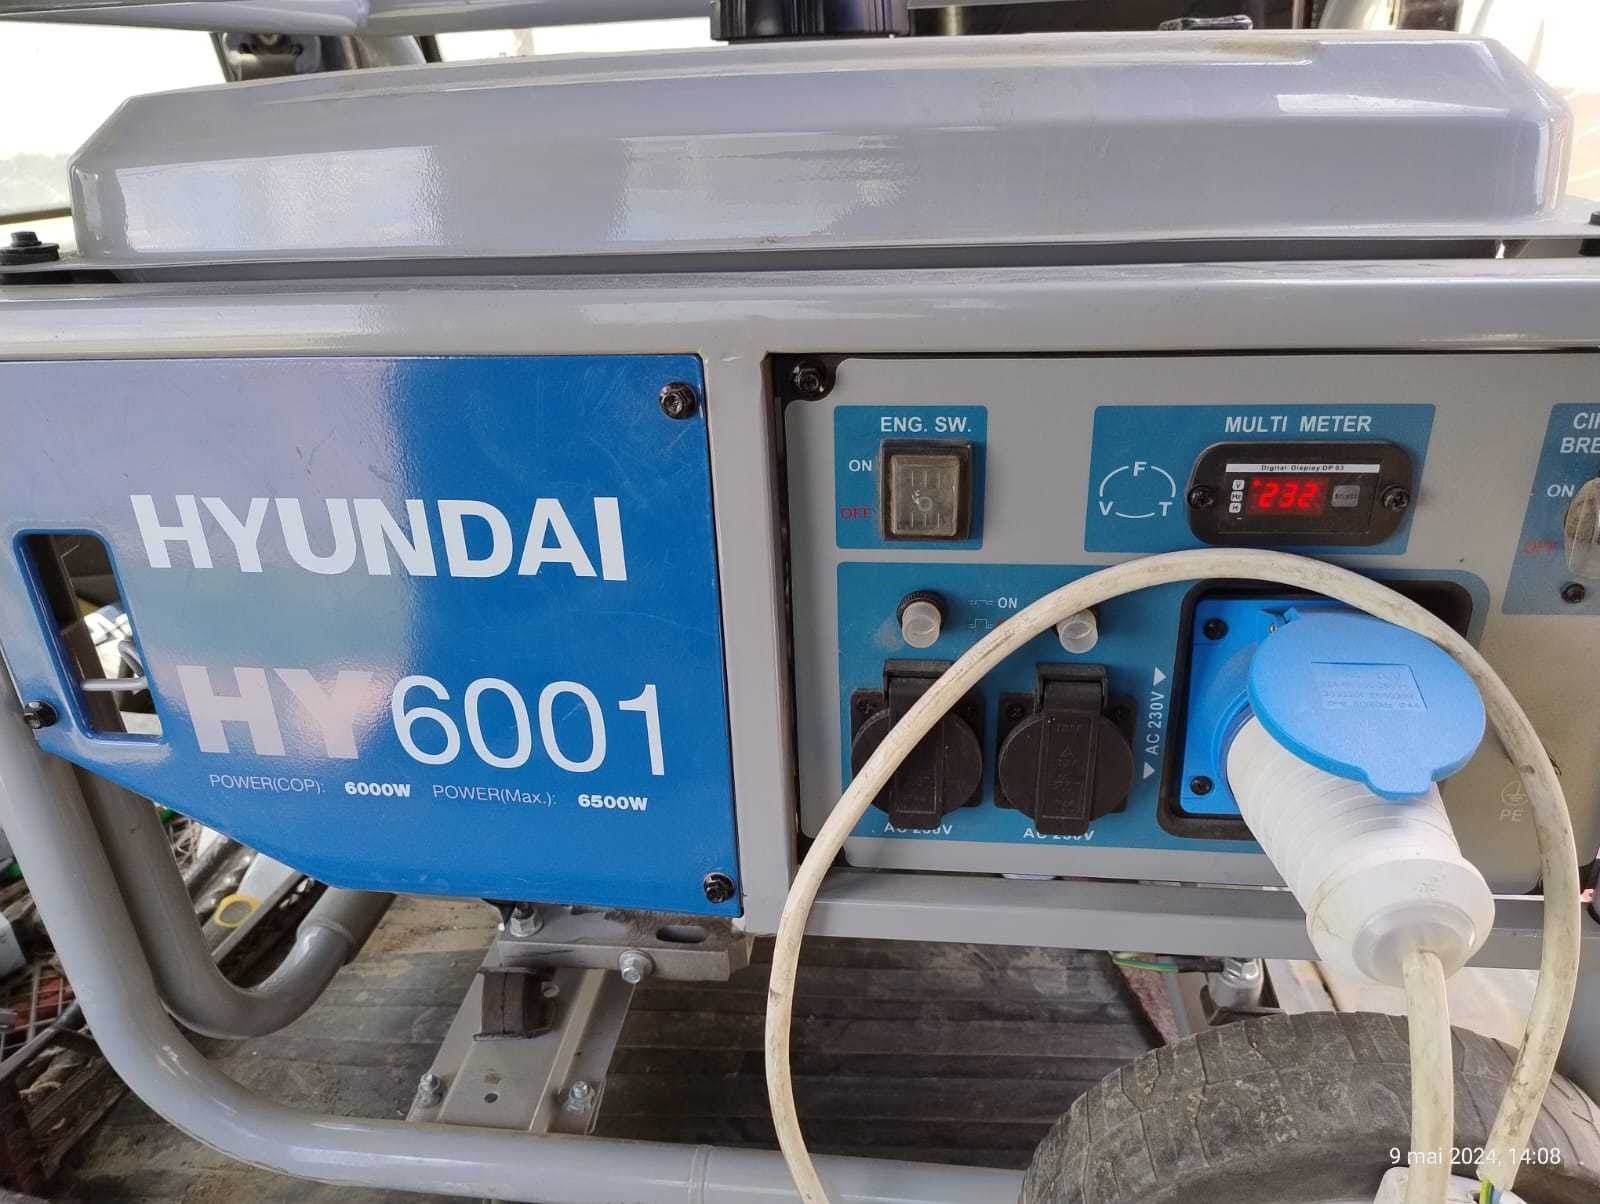 Vand generator Hyundai HY6001 putere 6KW, 15CP - in garantie